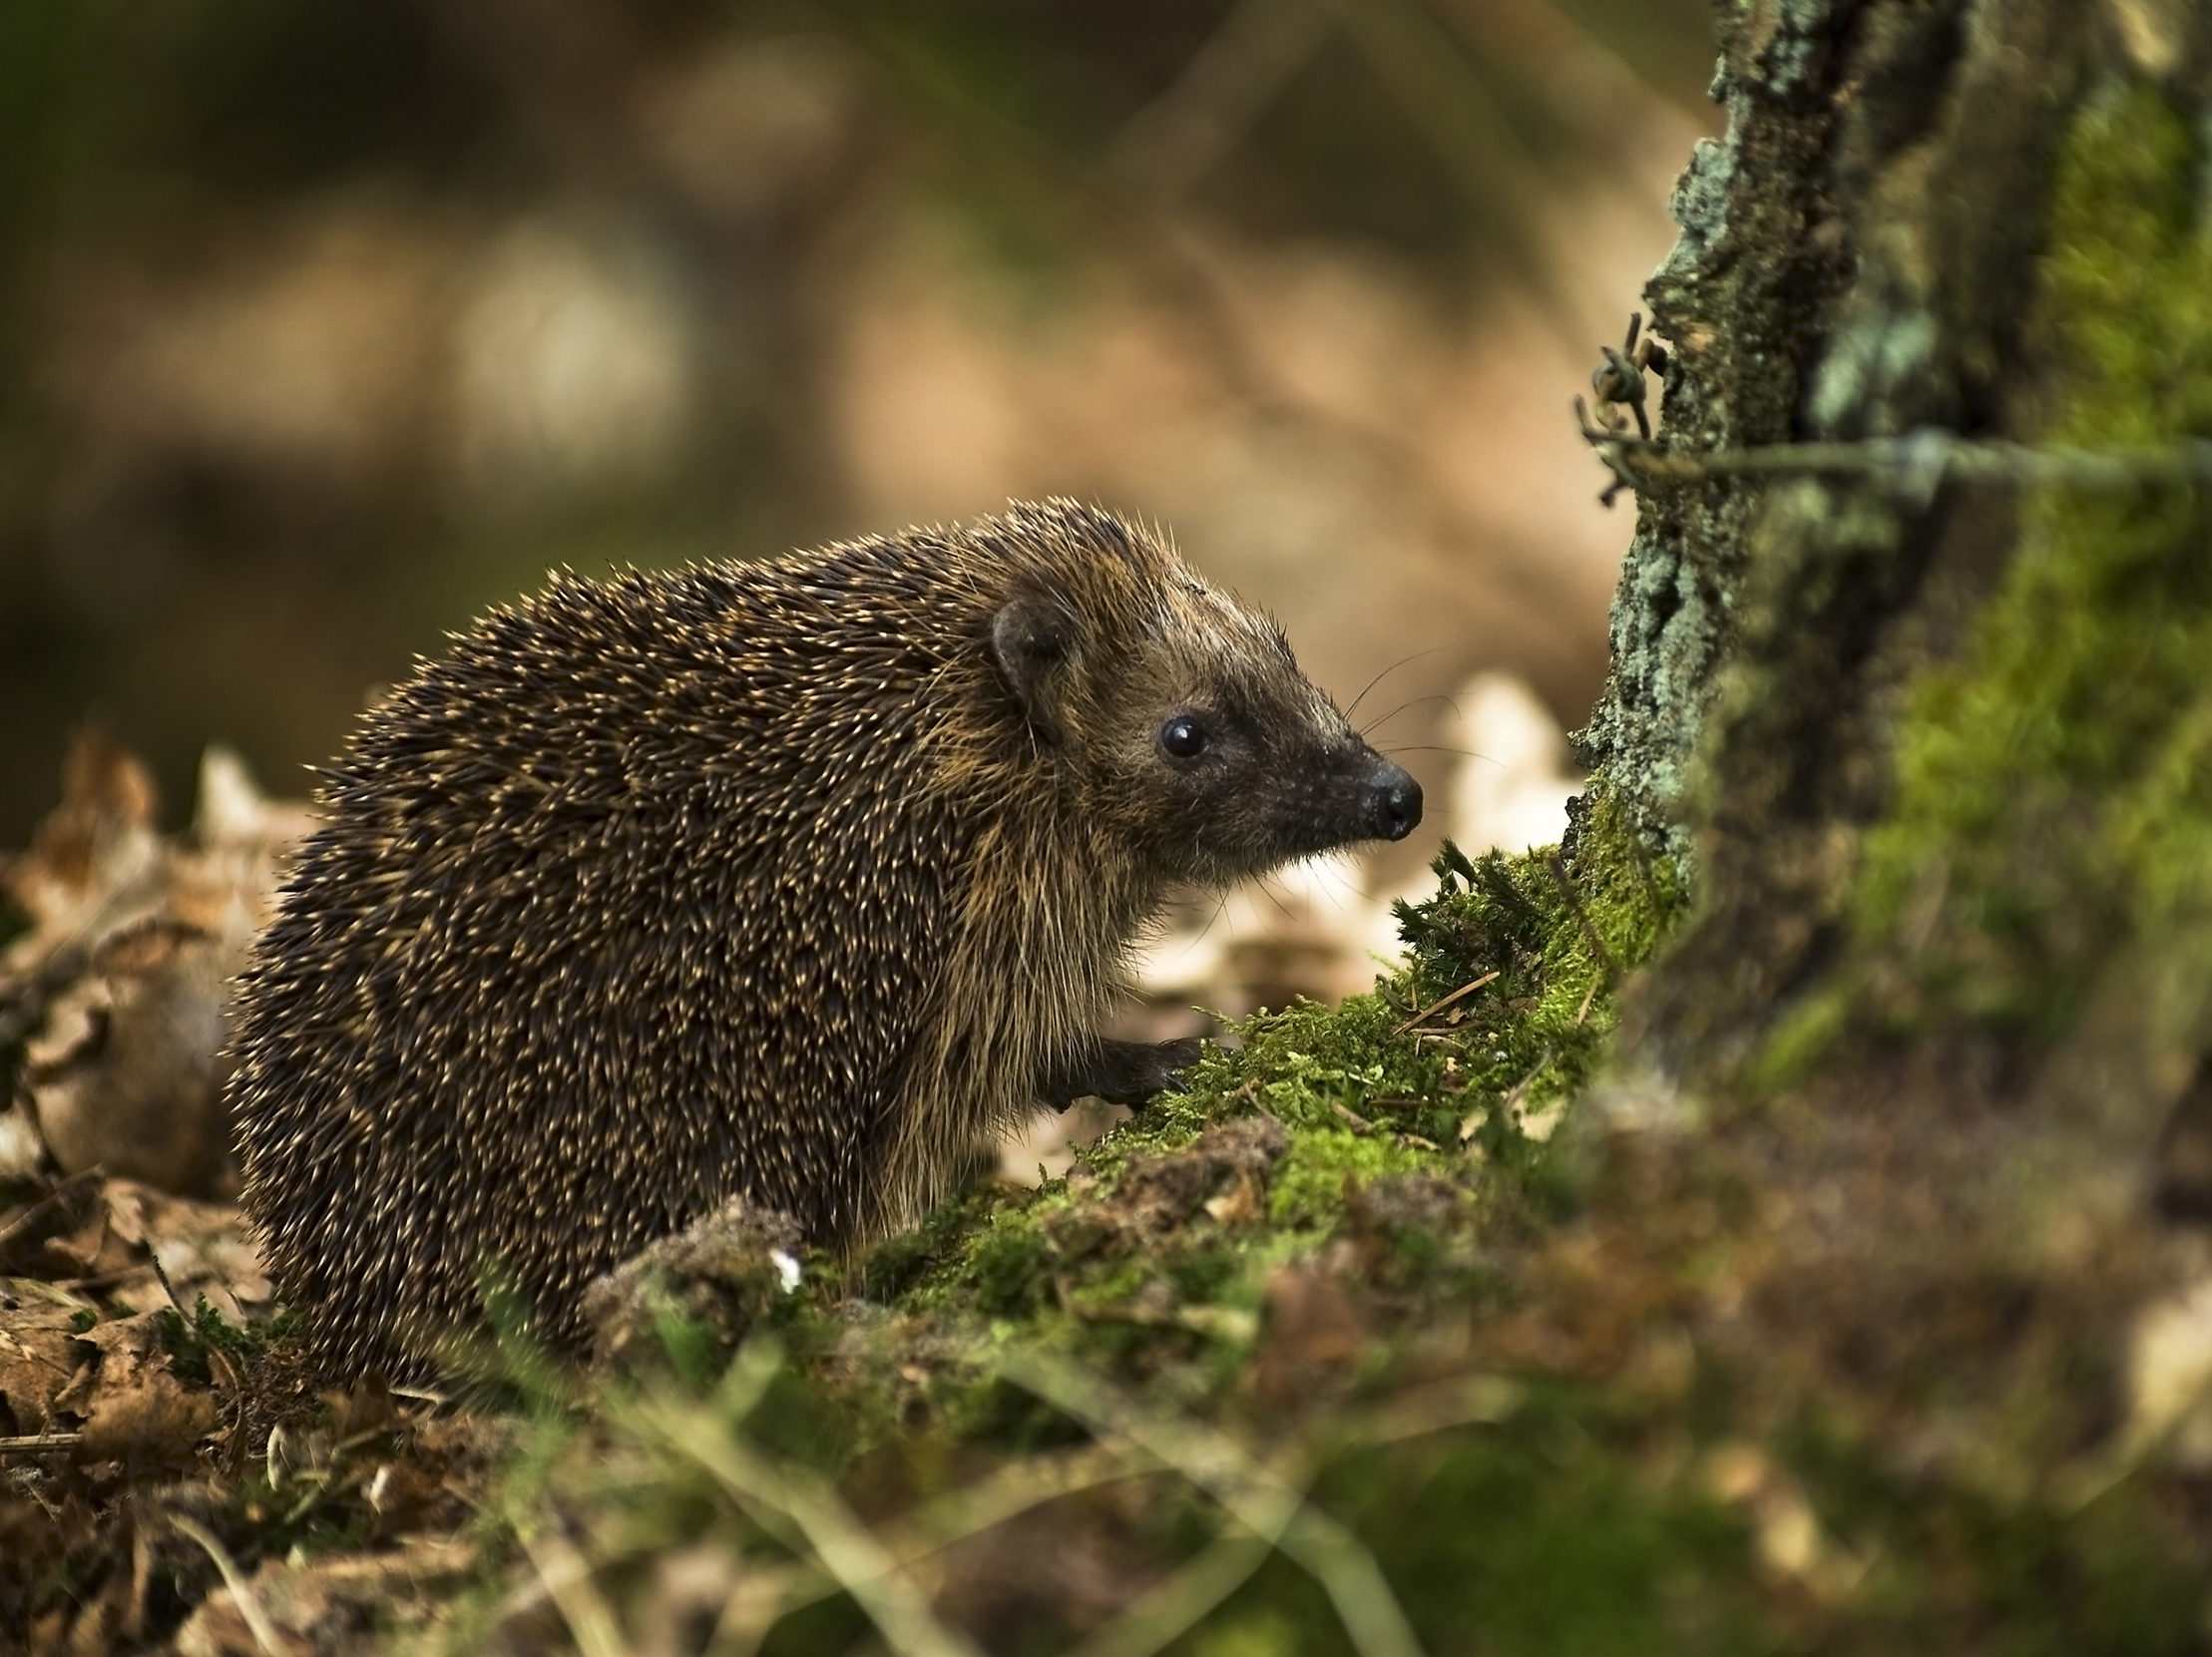 A hedgehog approaches a tree